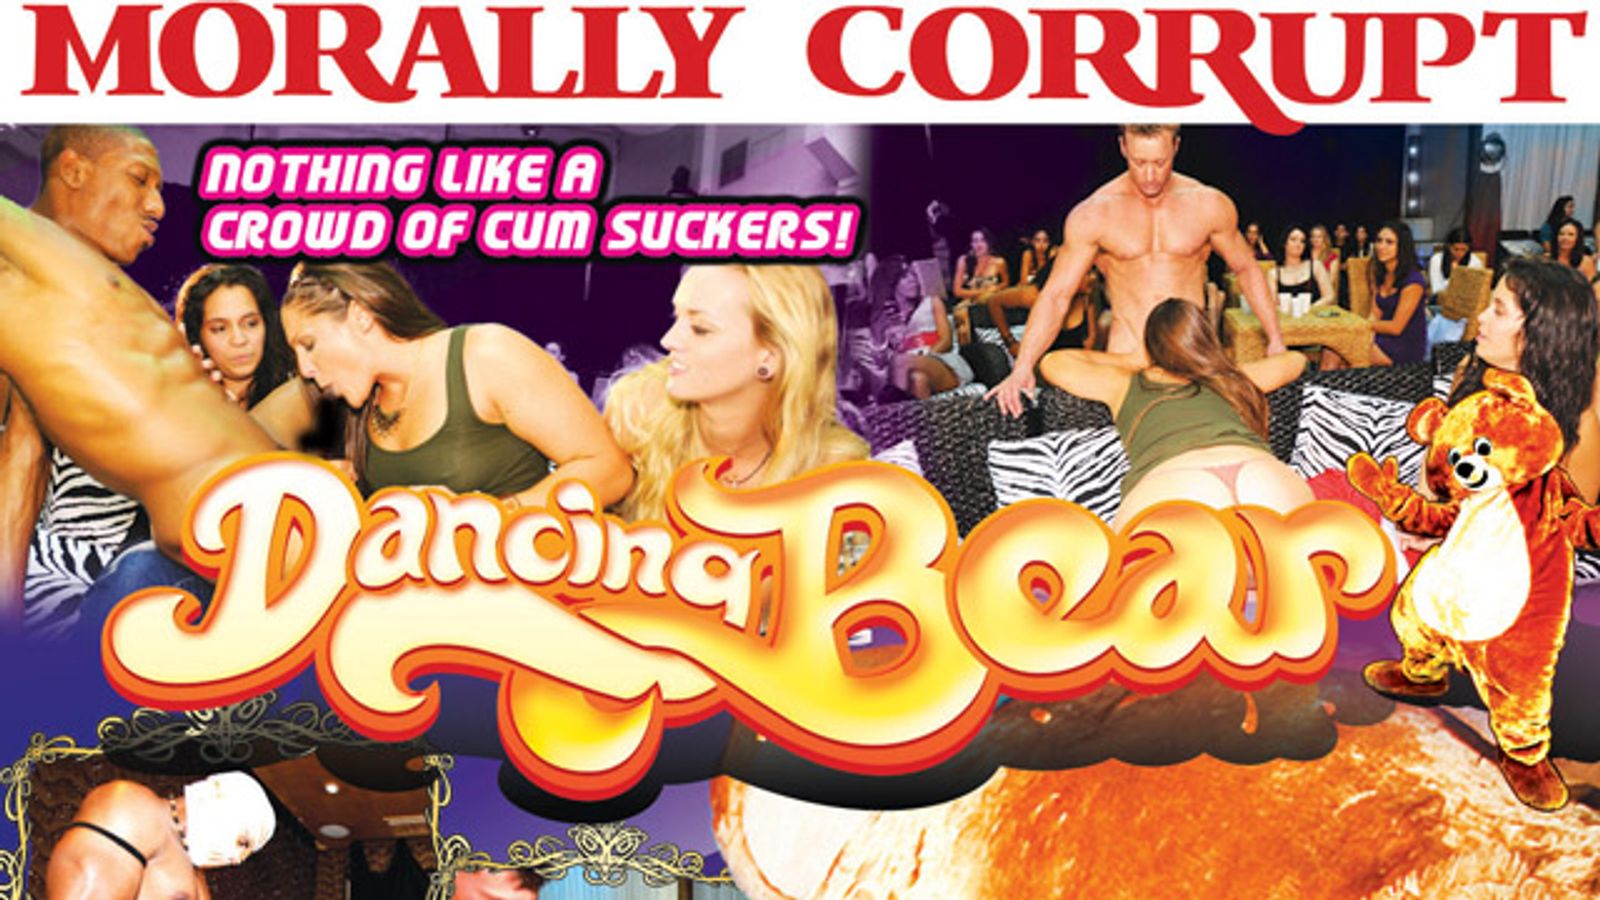 'Dancing Bear' Debuts on DVD, Creating Fresh Niche